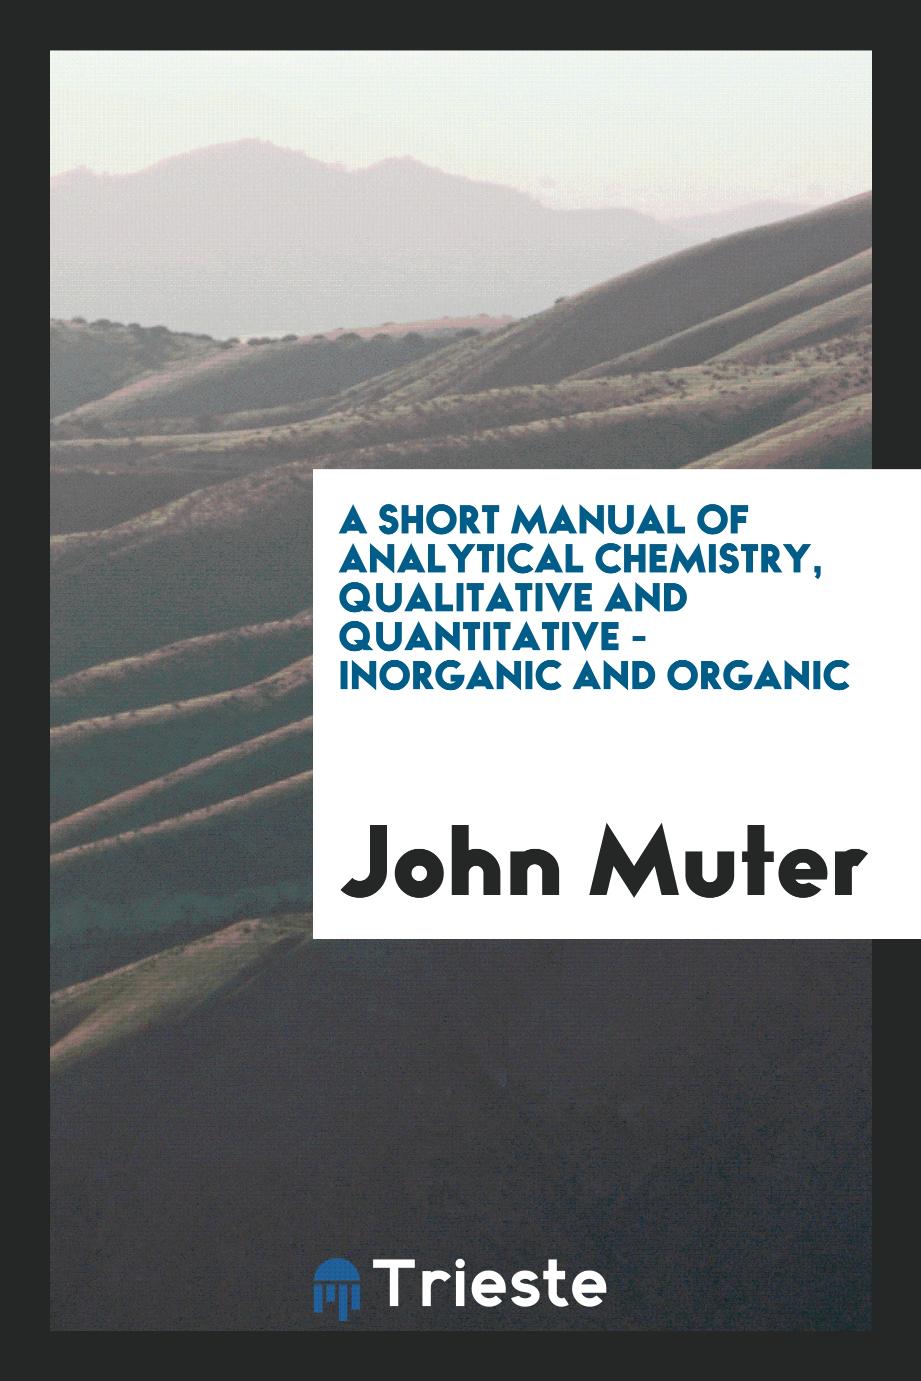 A short manual of analytical chemistry, qualitative and quantitative - inorganic and organic